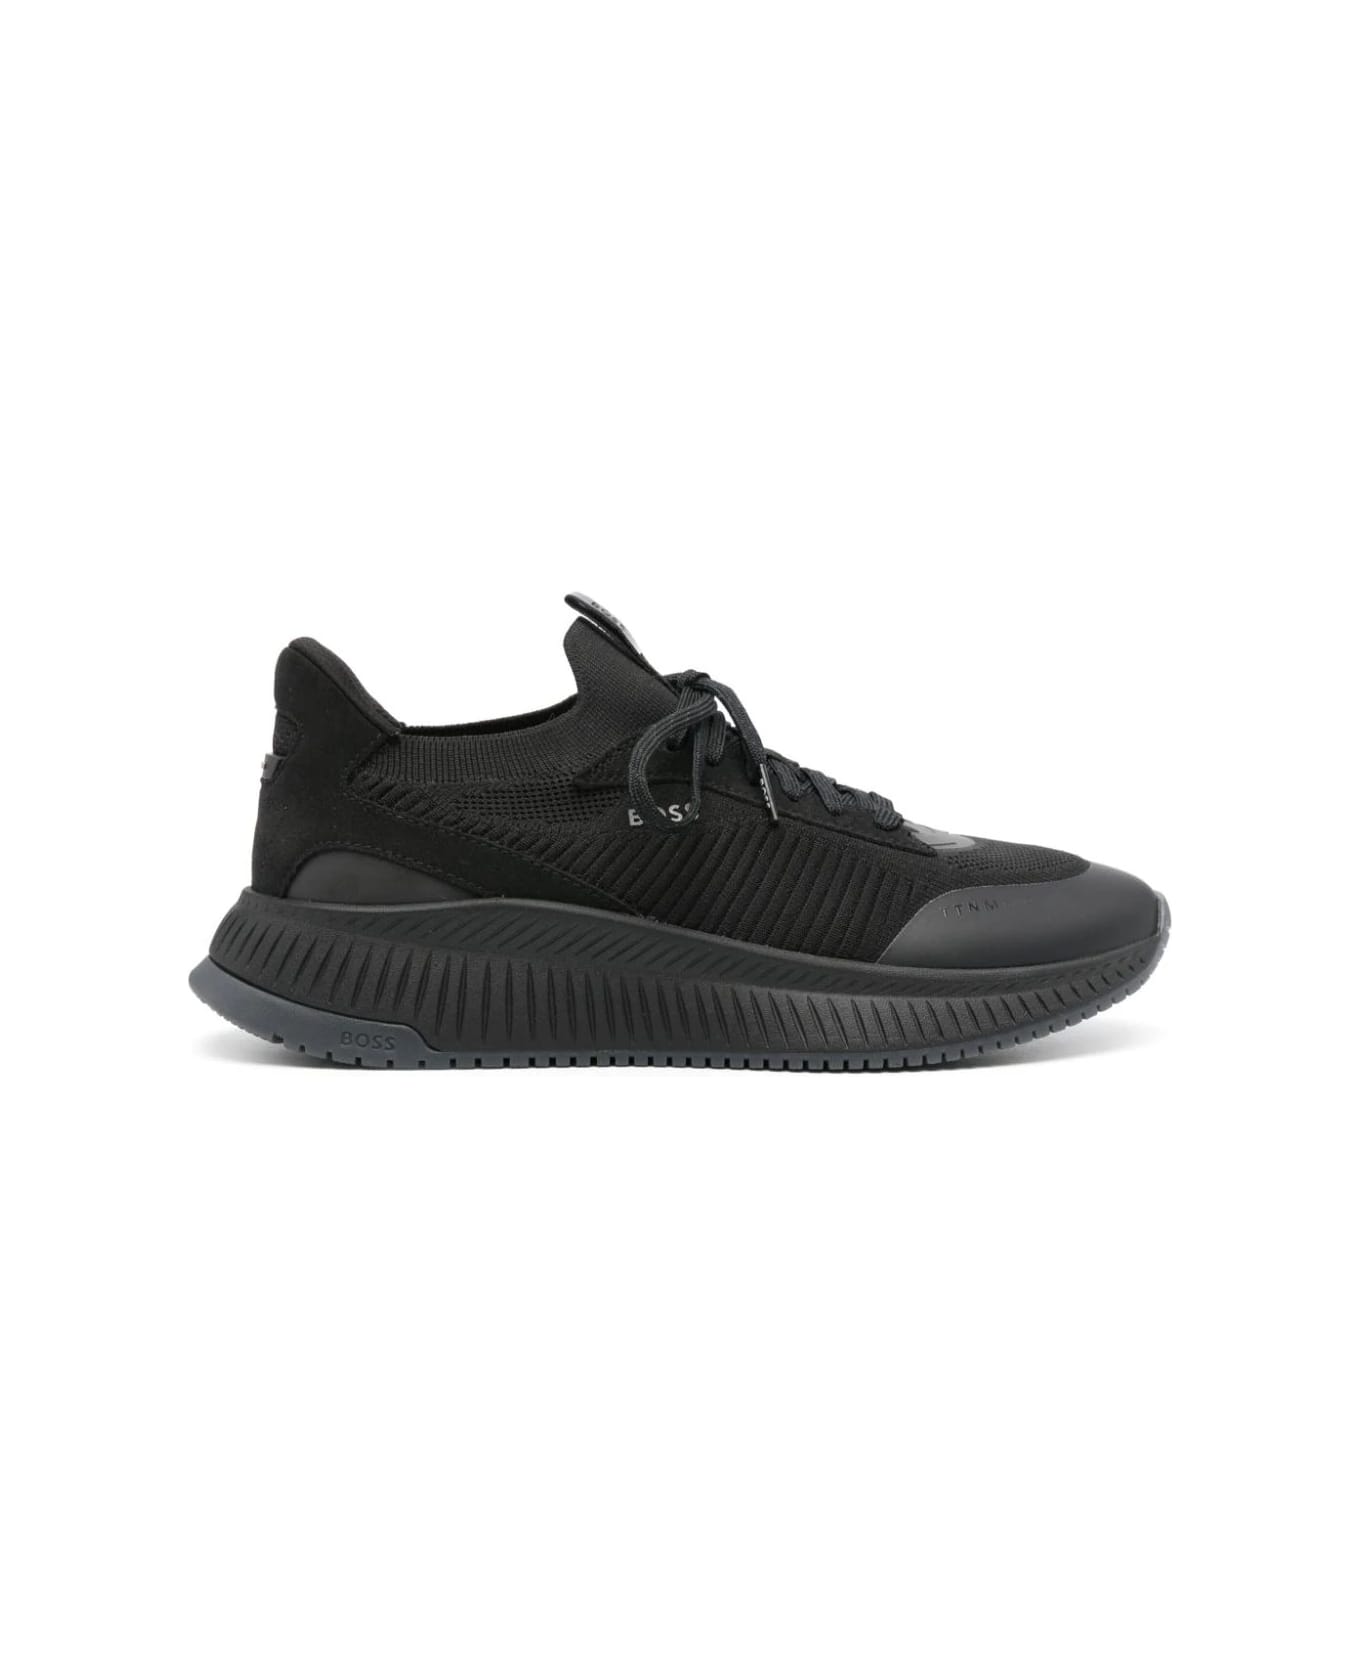 Hugo Boss Black Sock Sneakers With Knitted Upper And Herringbone Sole - Black スニーカー